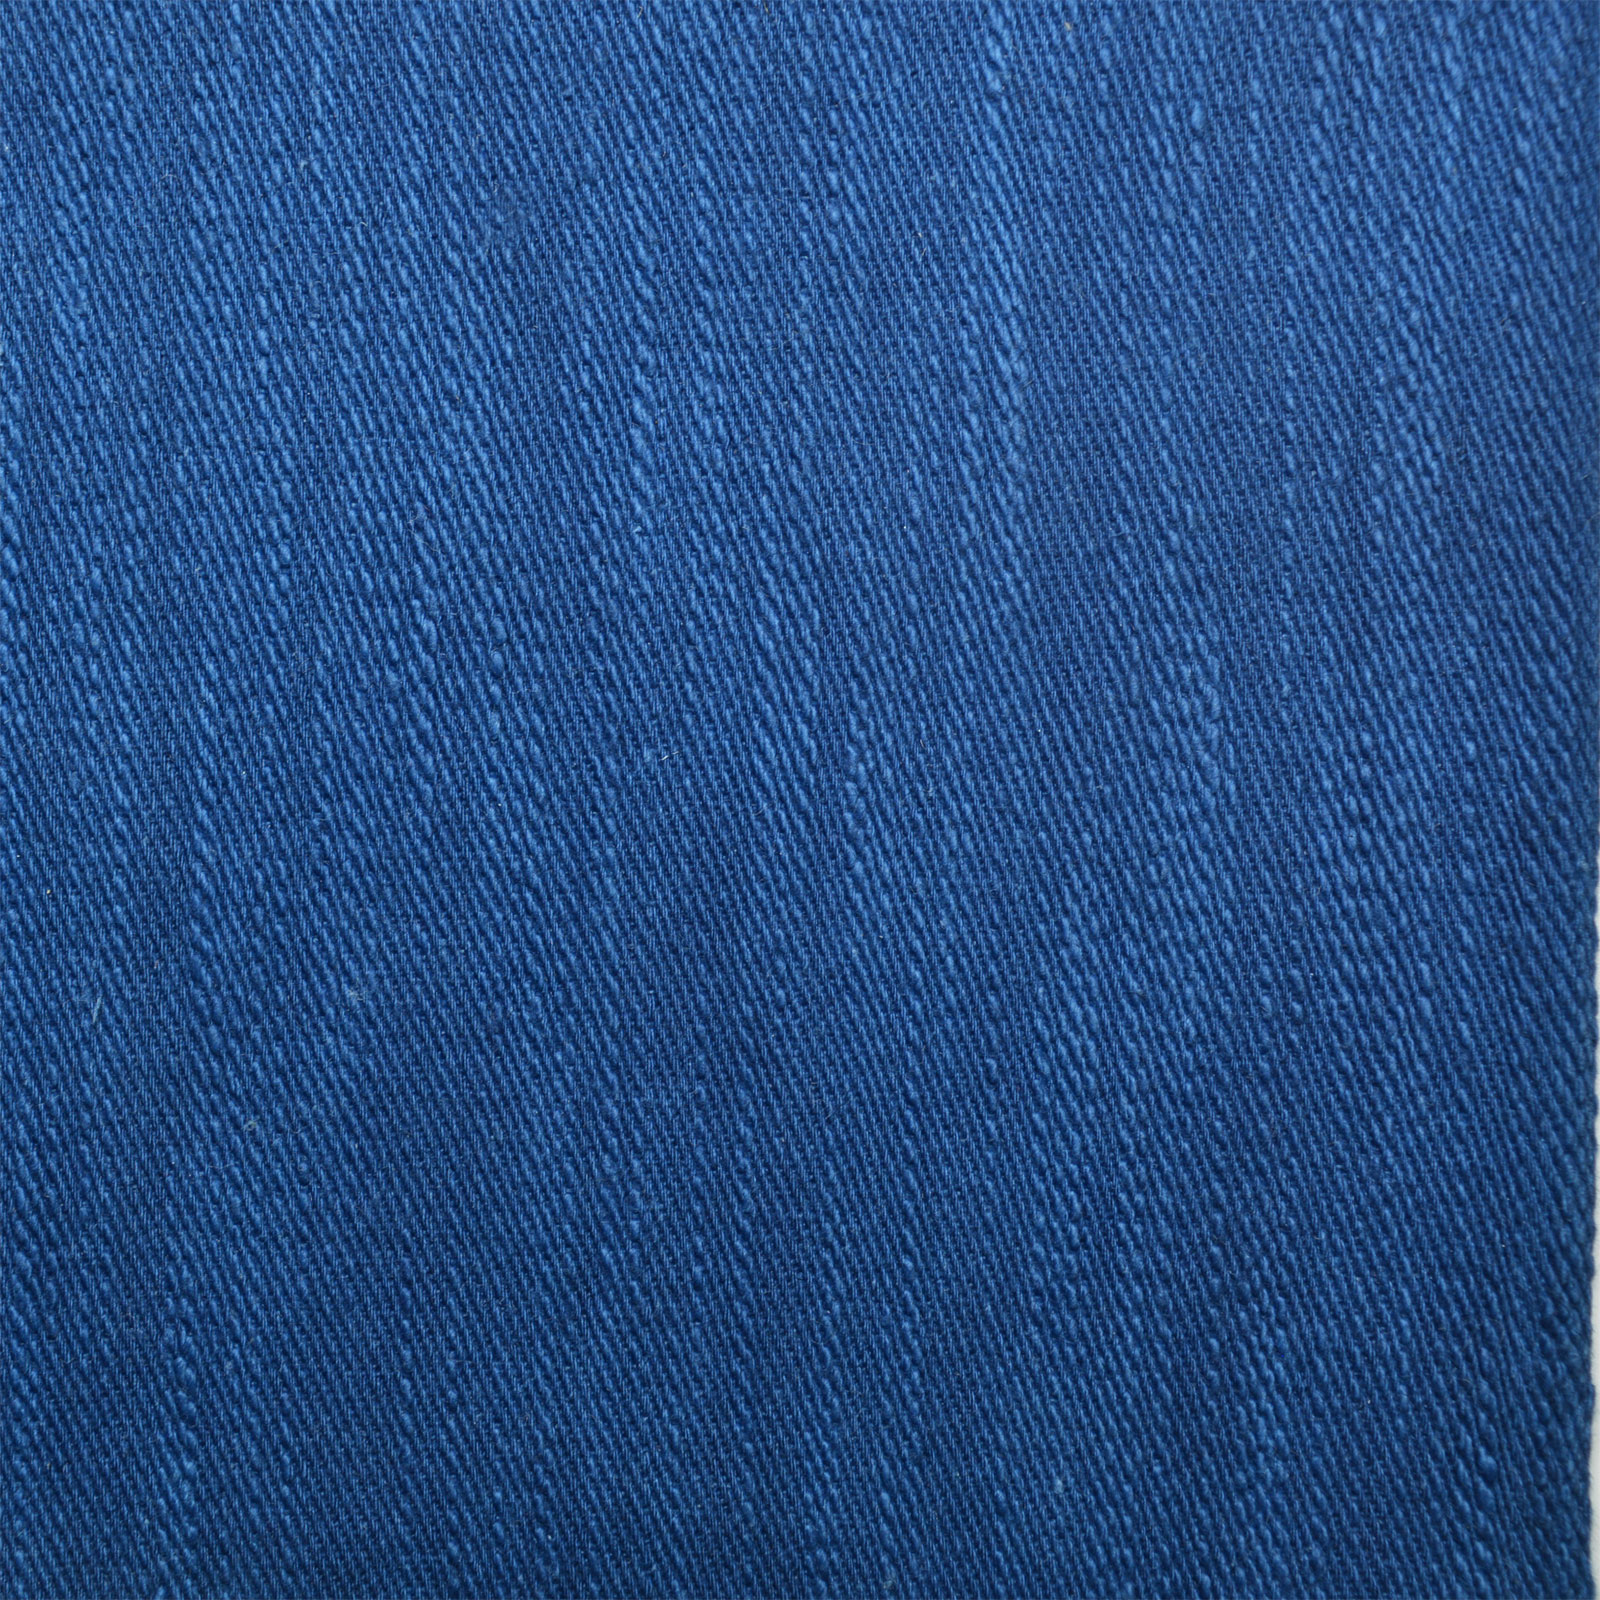 Ecofriendly Handwoven SelvedgeDenim - 9.0 Oz - Oxford Blue - Natural Indigo (Fabric Dyed)-MWKD-FBD-1010-OXB-NI